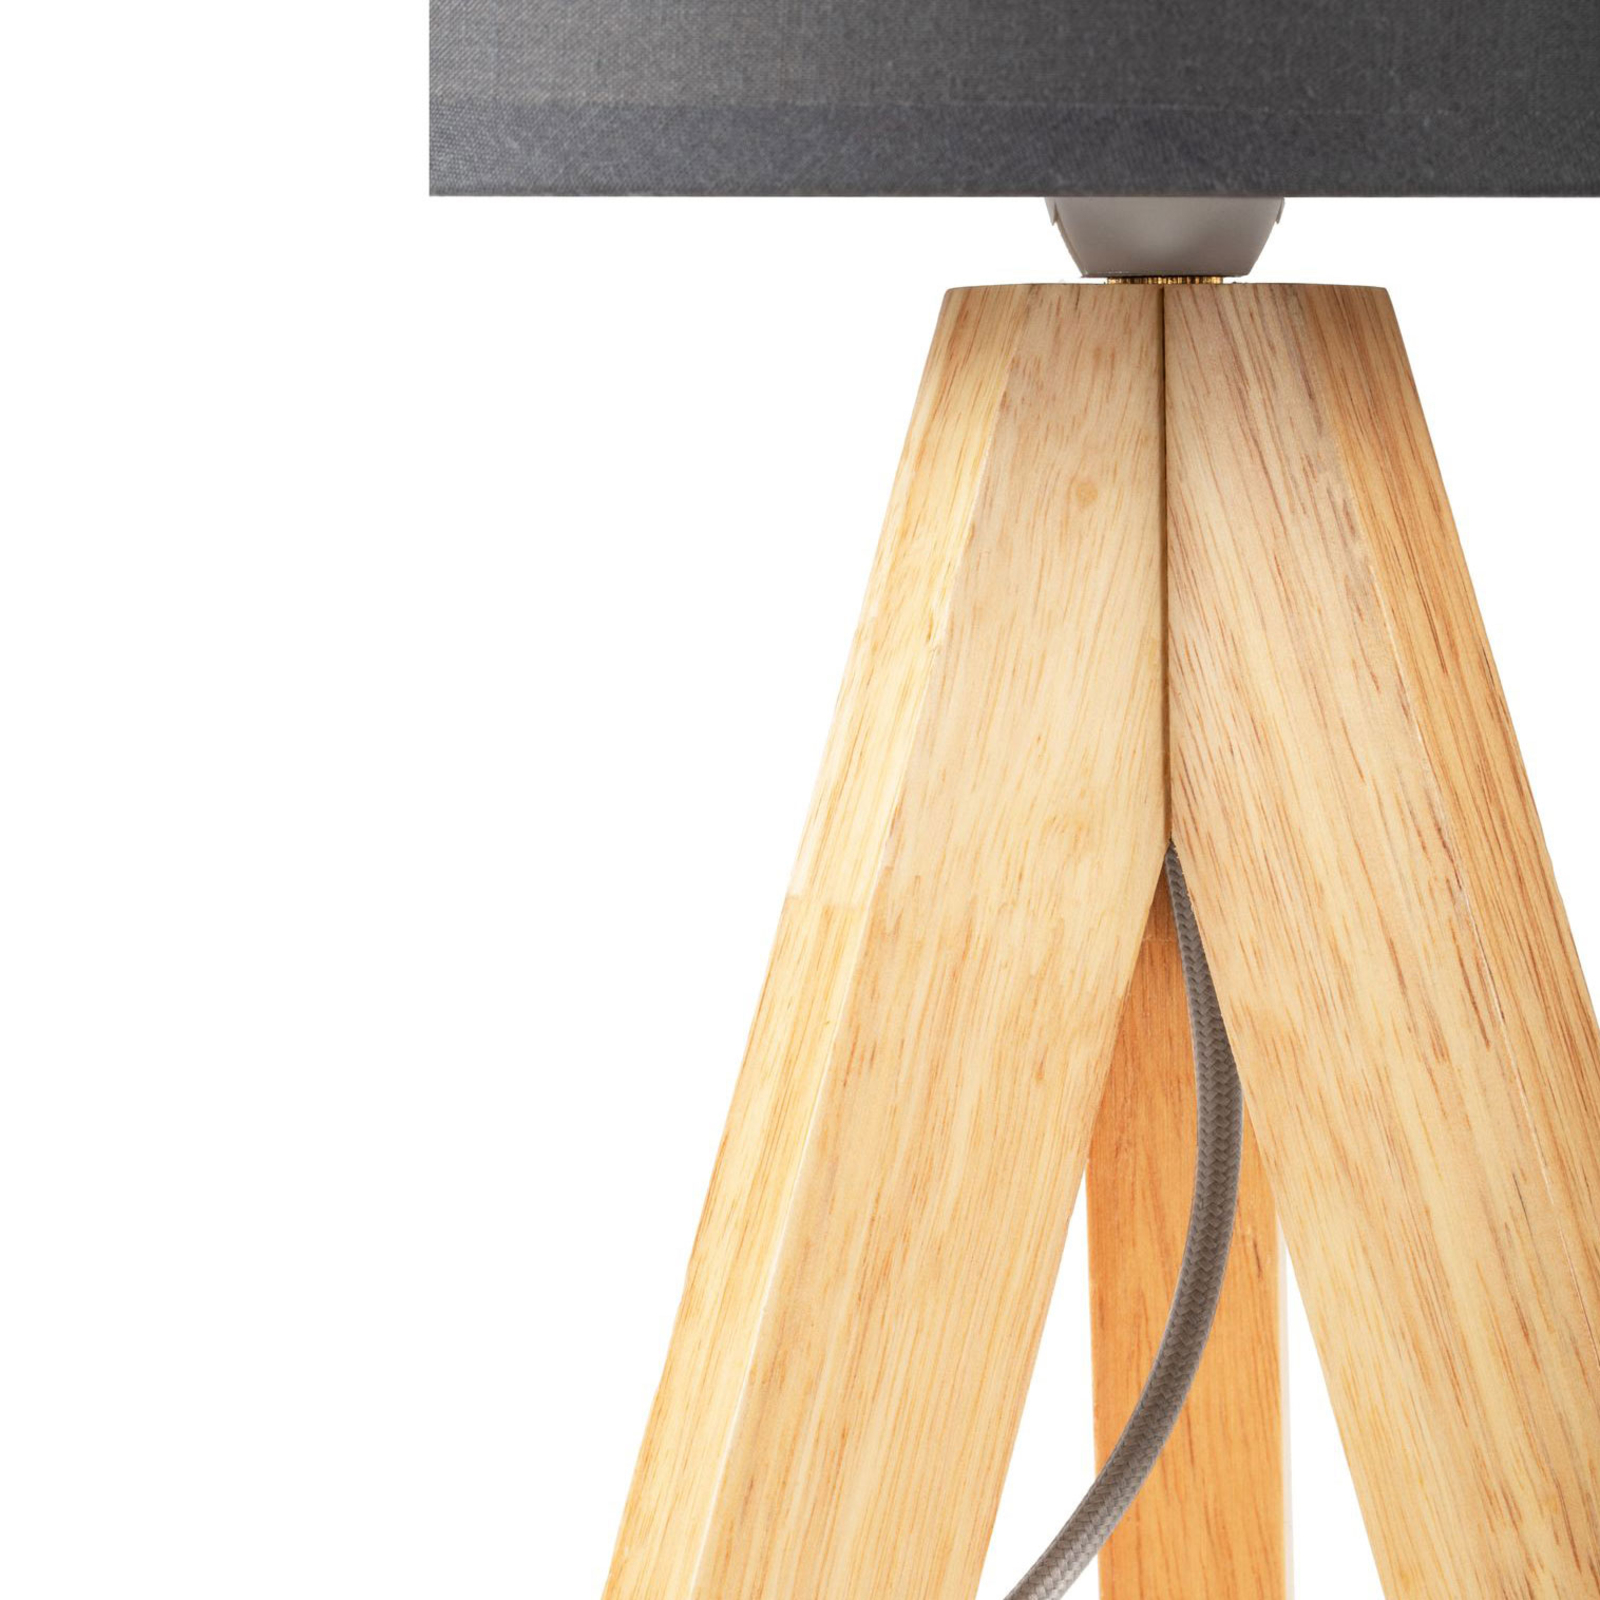 Pauleen Woody Love lámpara mesa armazón de madera